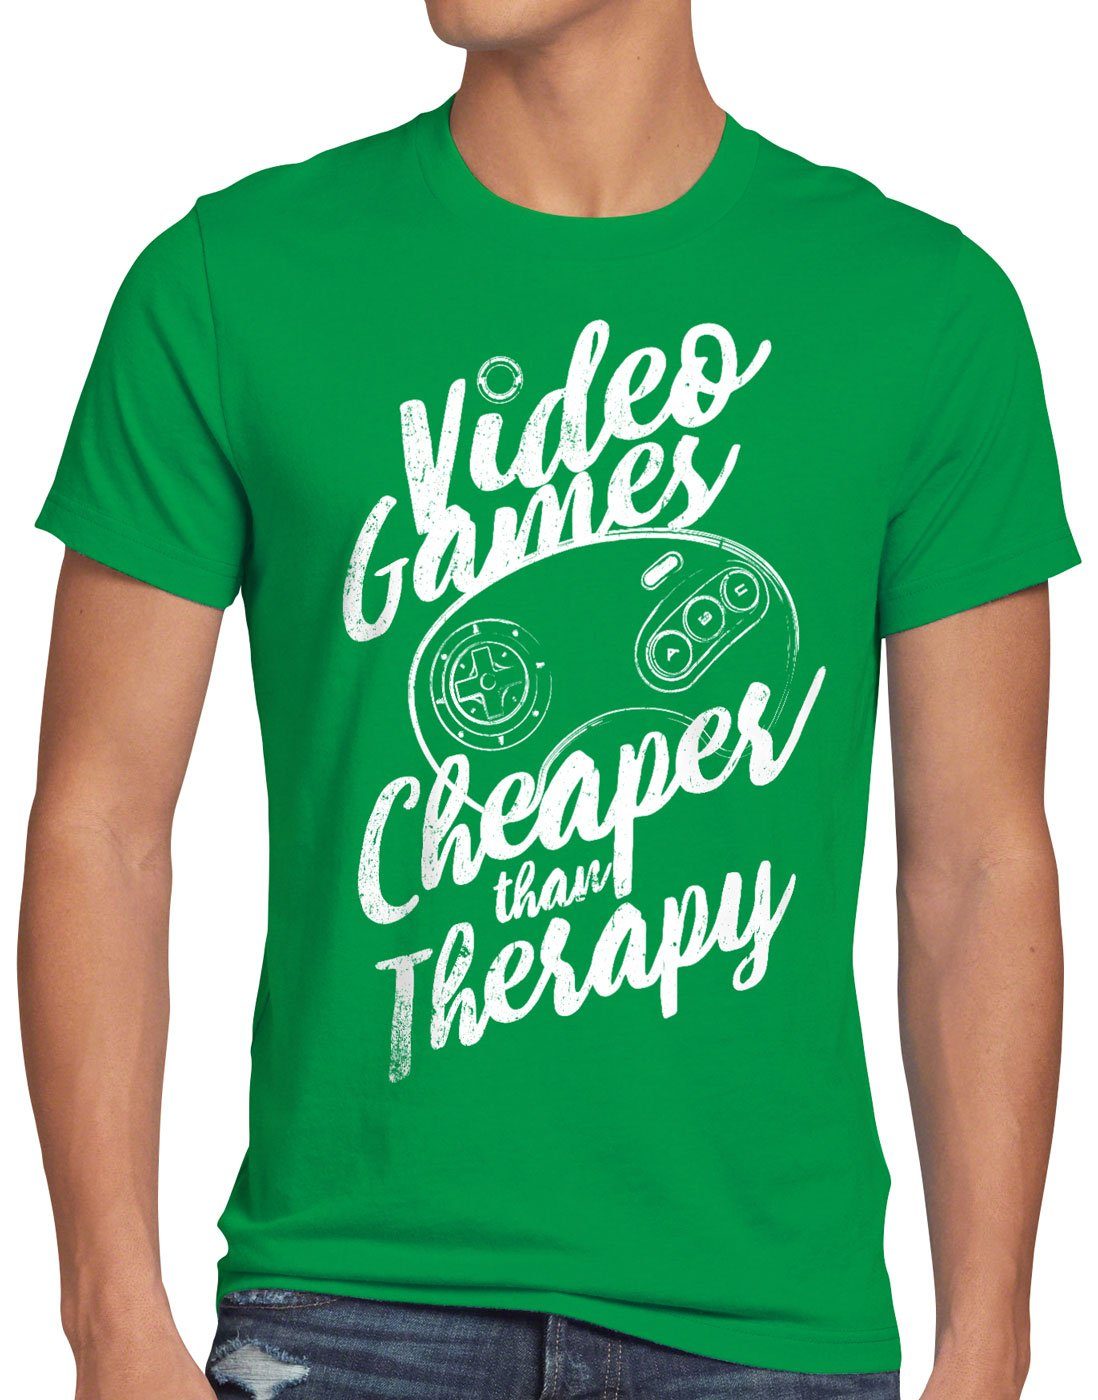 style3 retro Print-Shirt T-Shirt Game gamer drive Video konsole Herren sonic classic grün Therapy